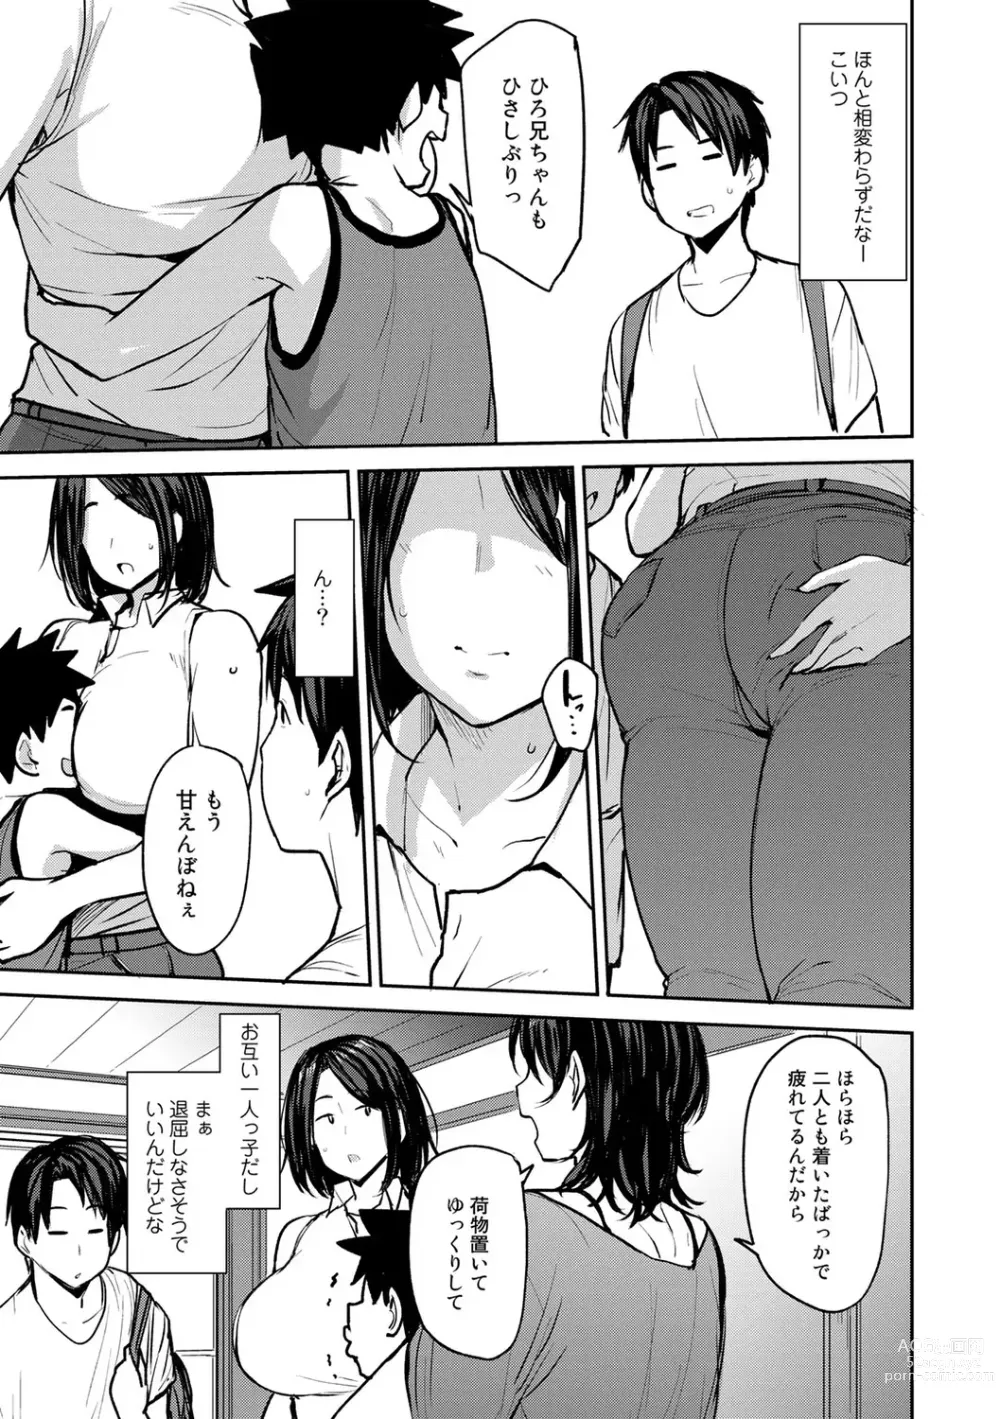 Page 7 of manga Soubo Koukan Nikki